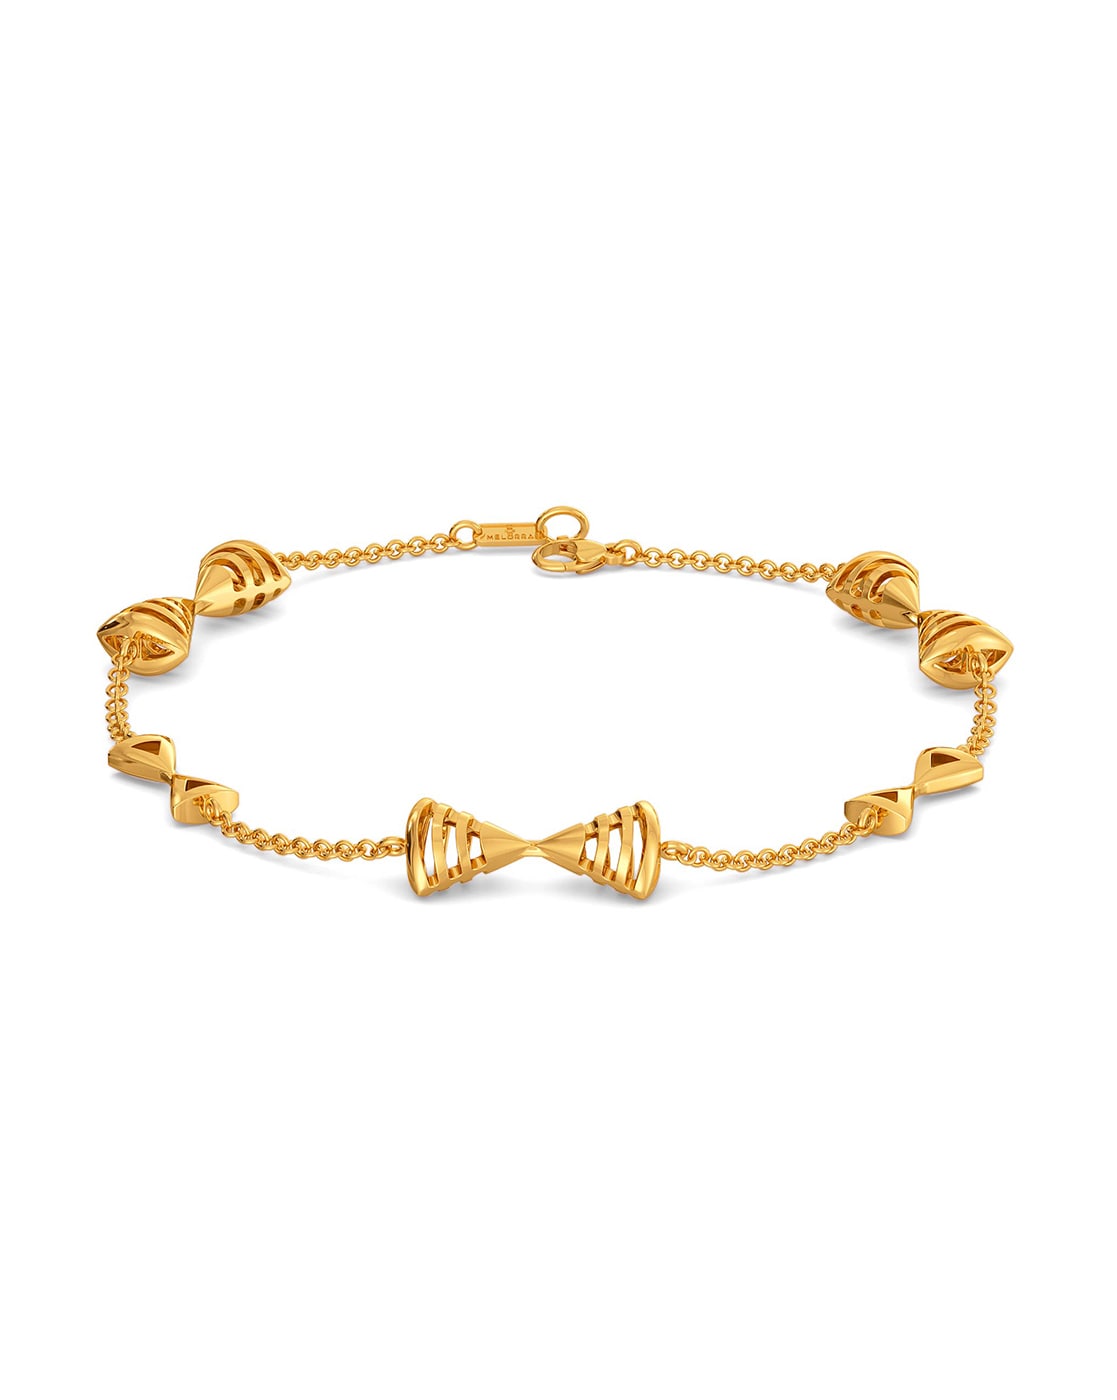 Details more than 89 new model gold bracelet best - in.duhocakina